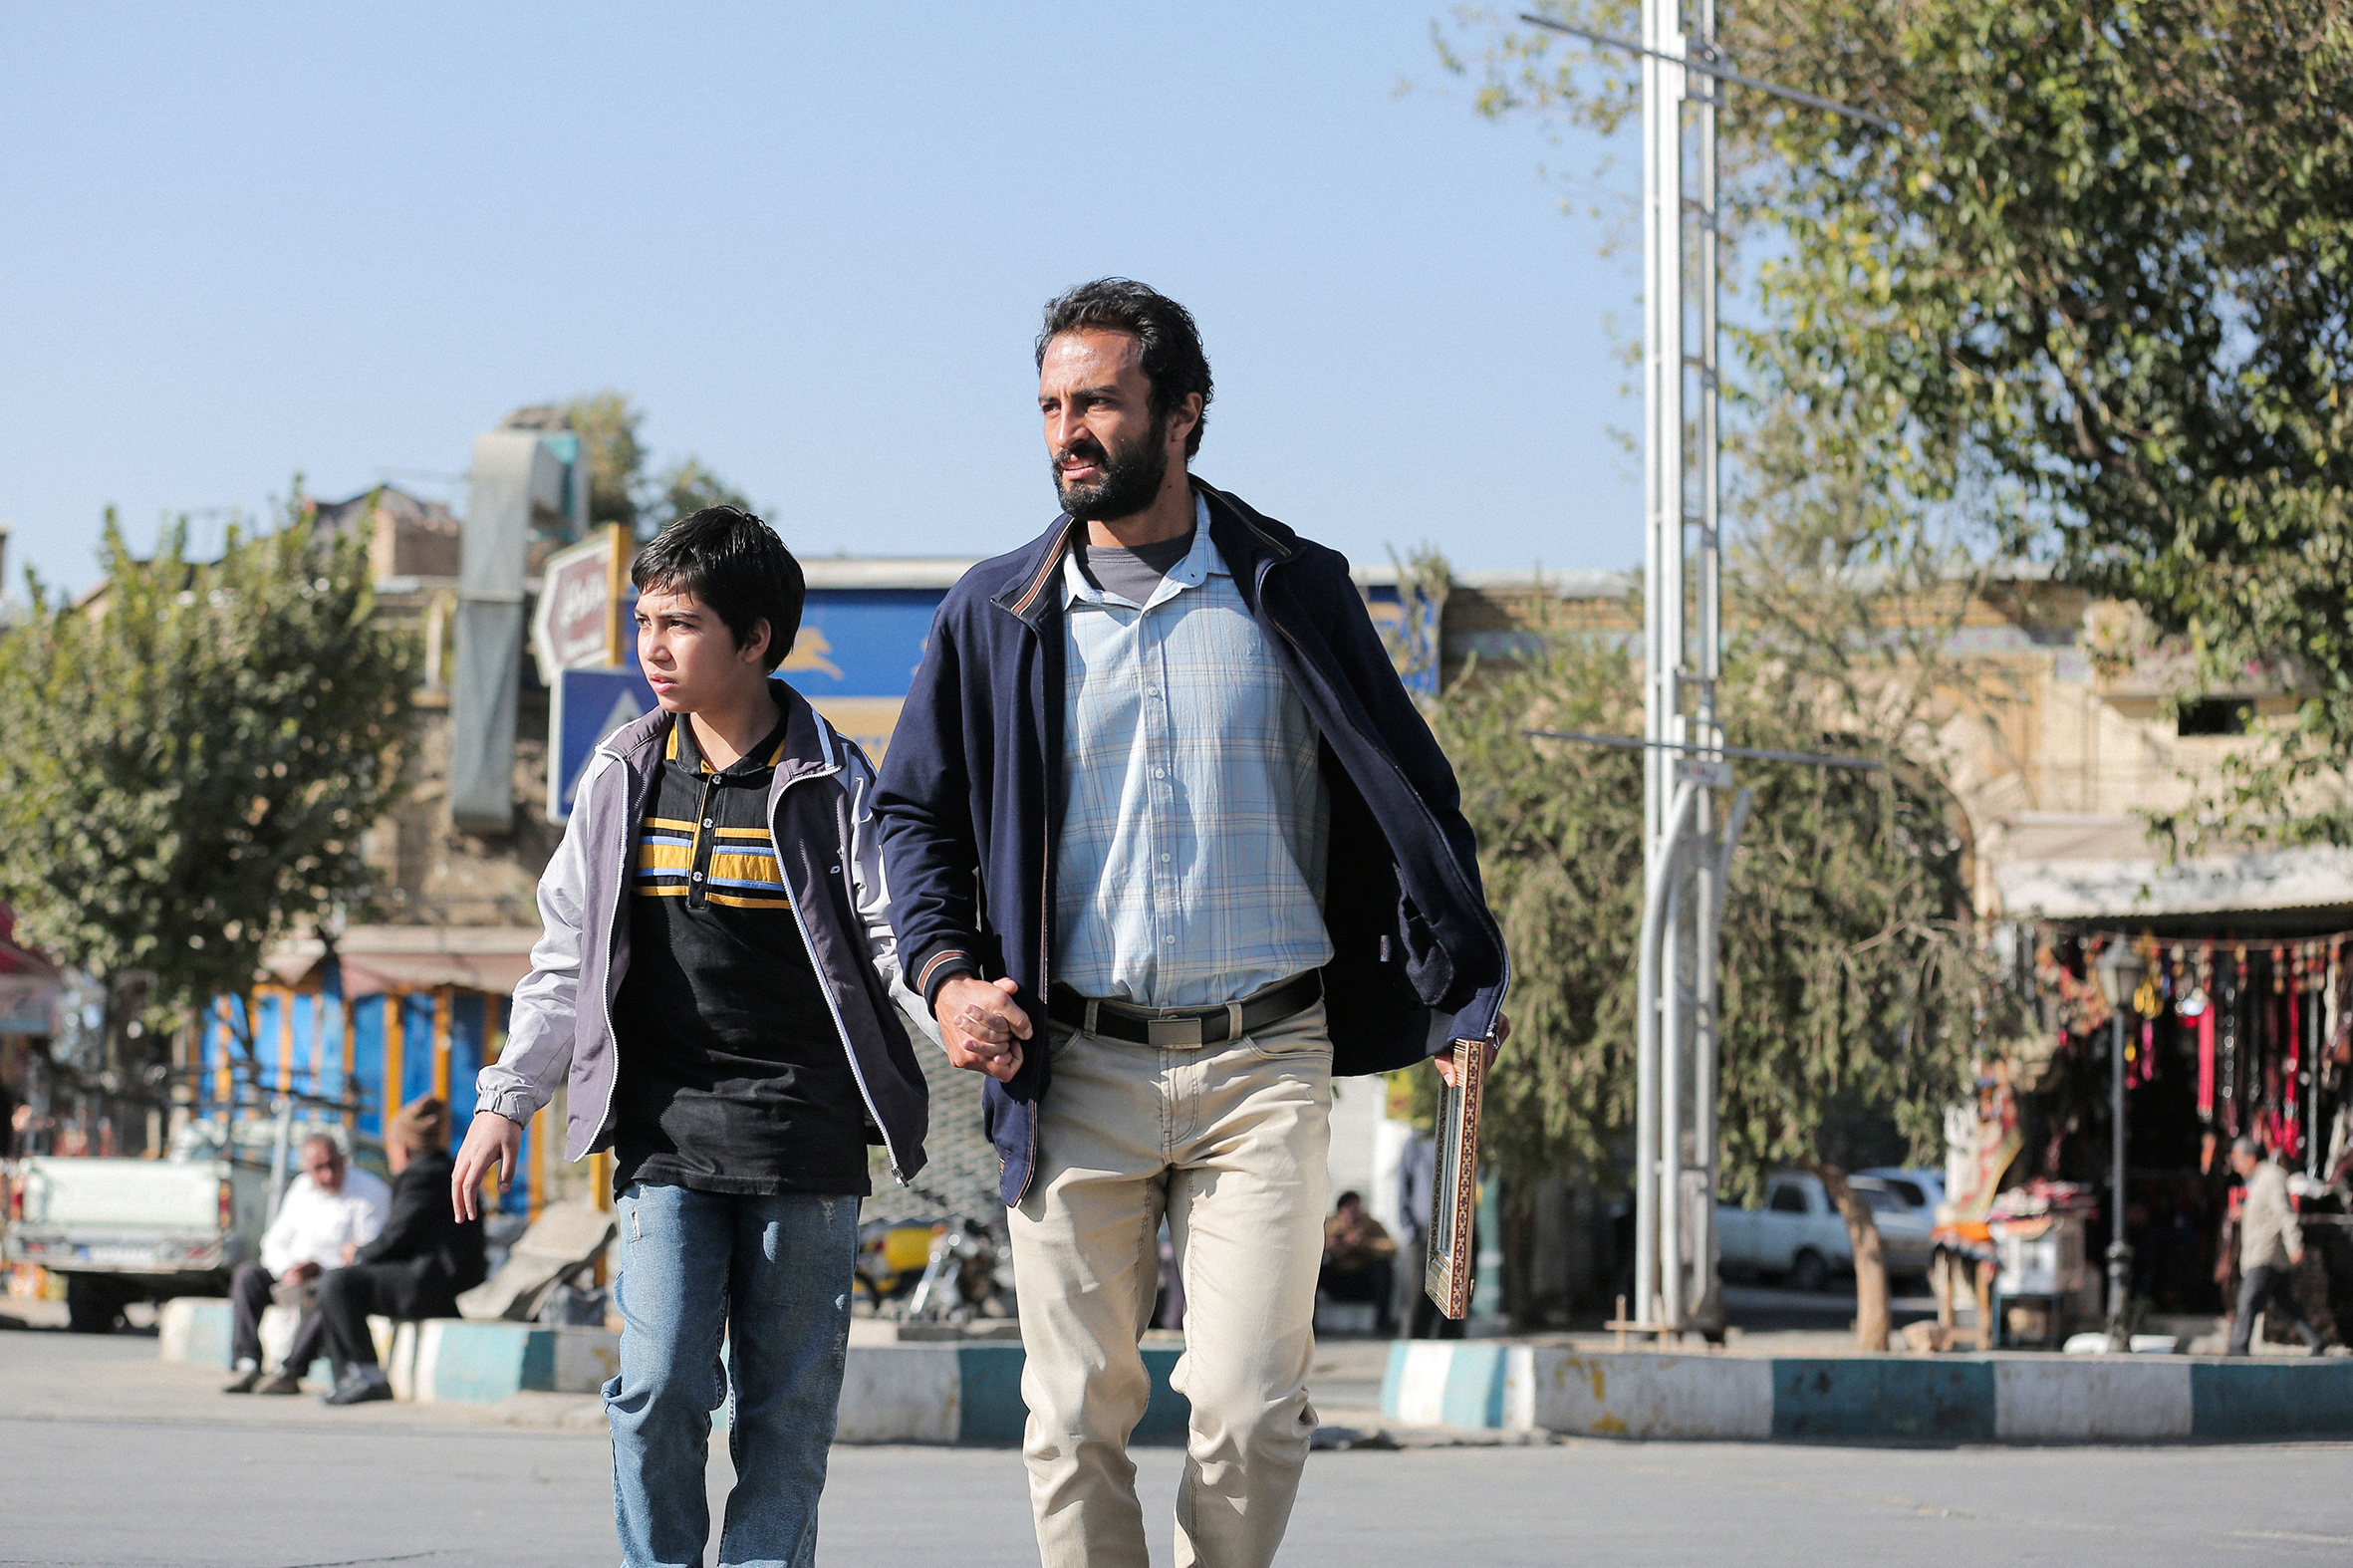 Rahim Soltani and his son walking at the street A hero